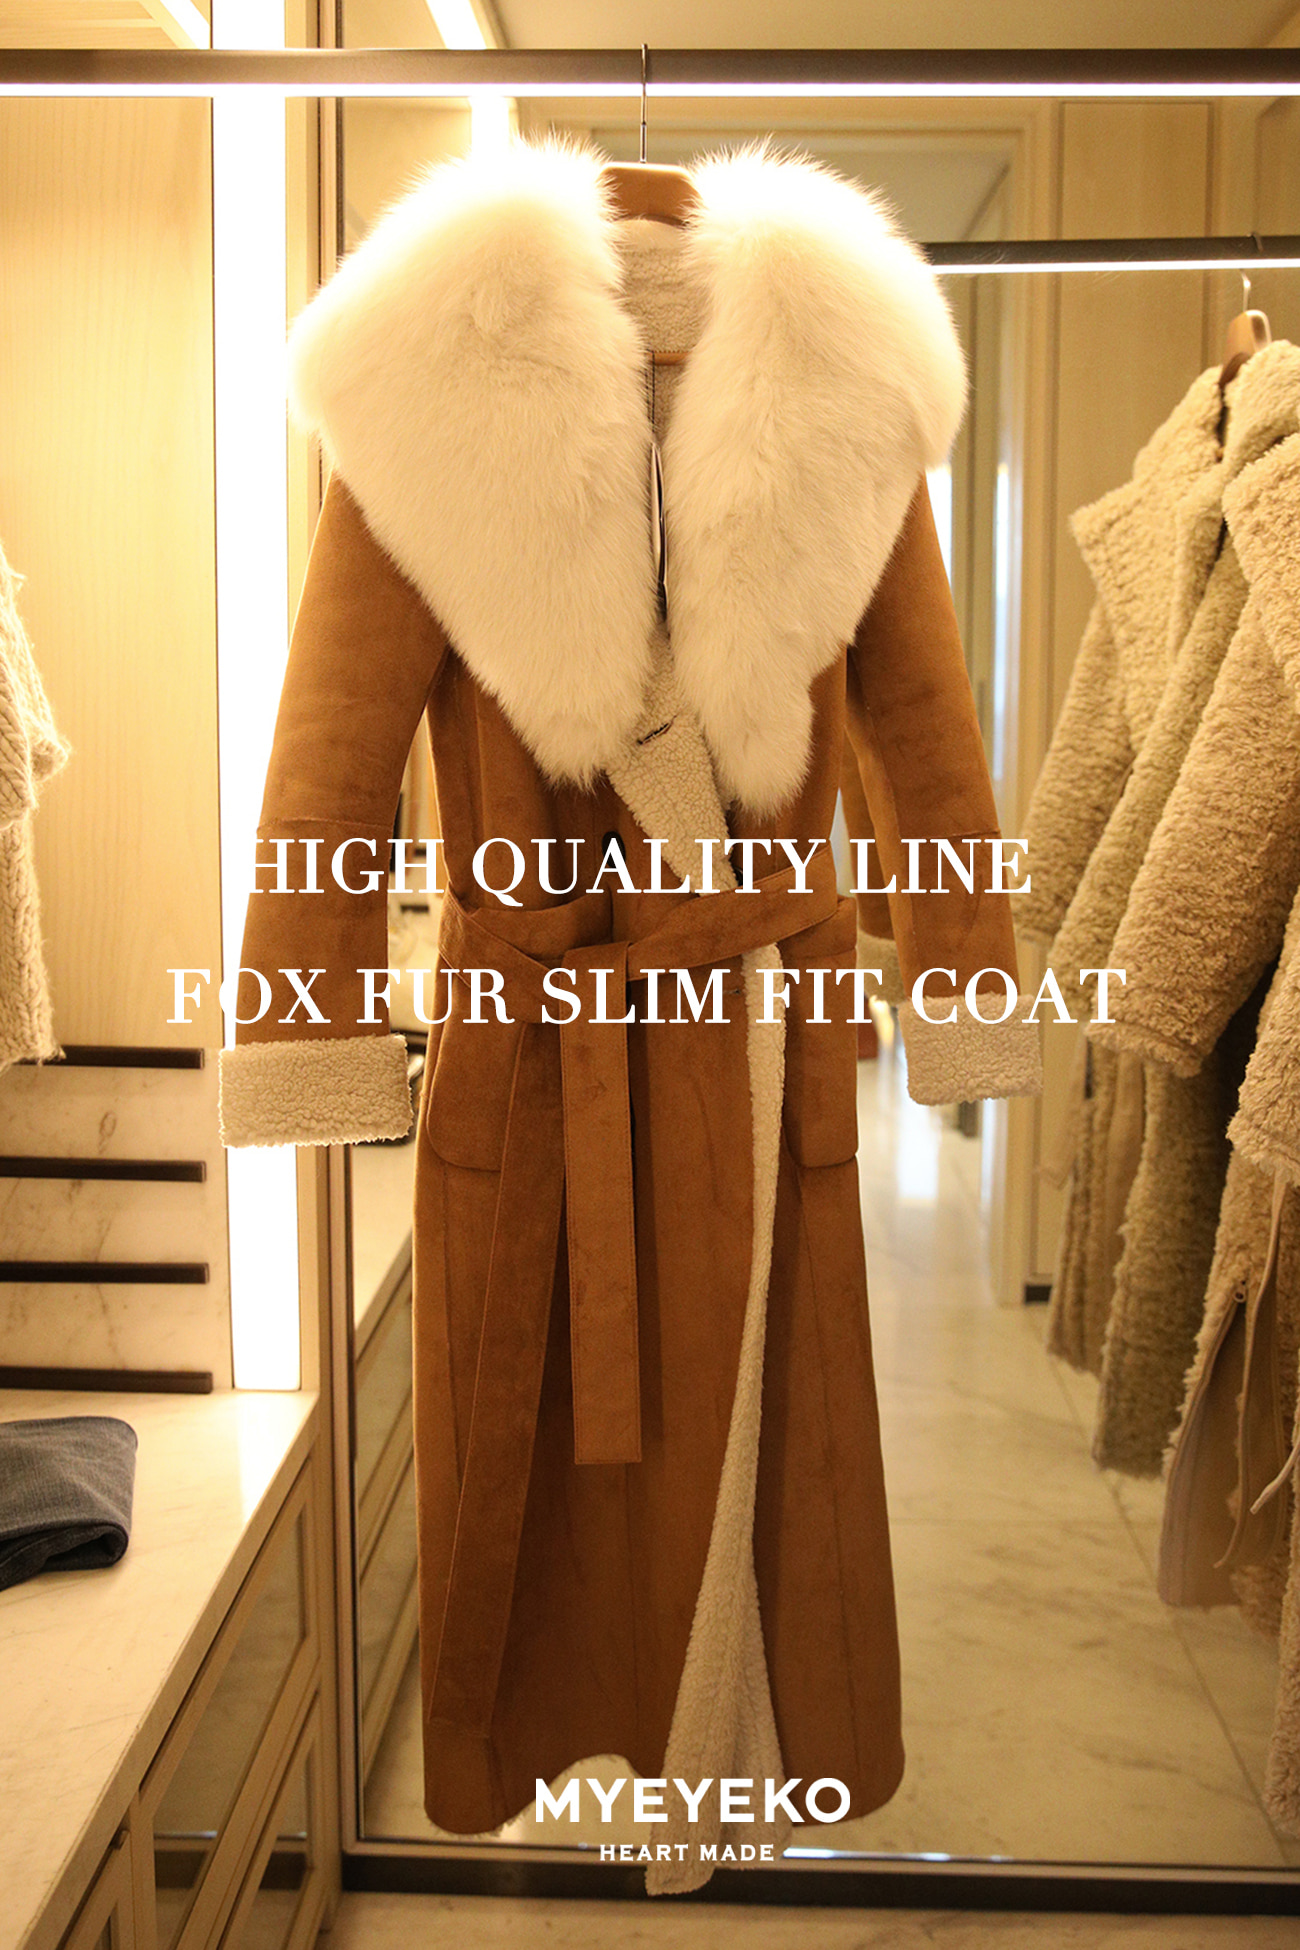 HIGH QUALITY LINE - FOX FUR SLIM FIT COAT